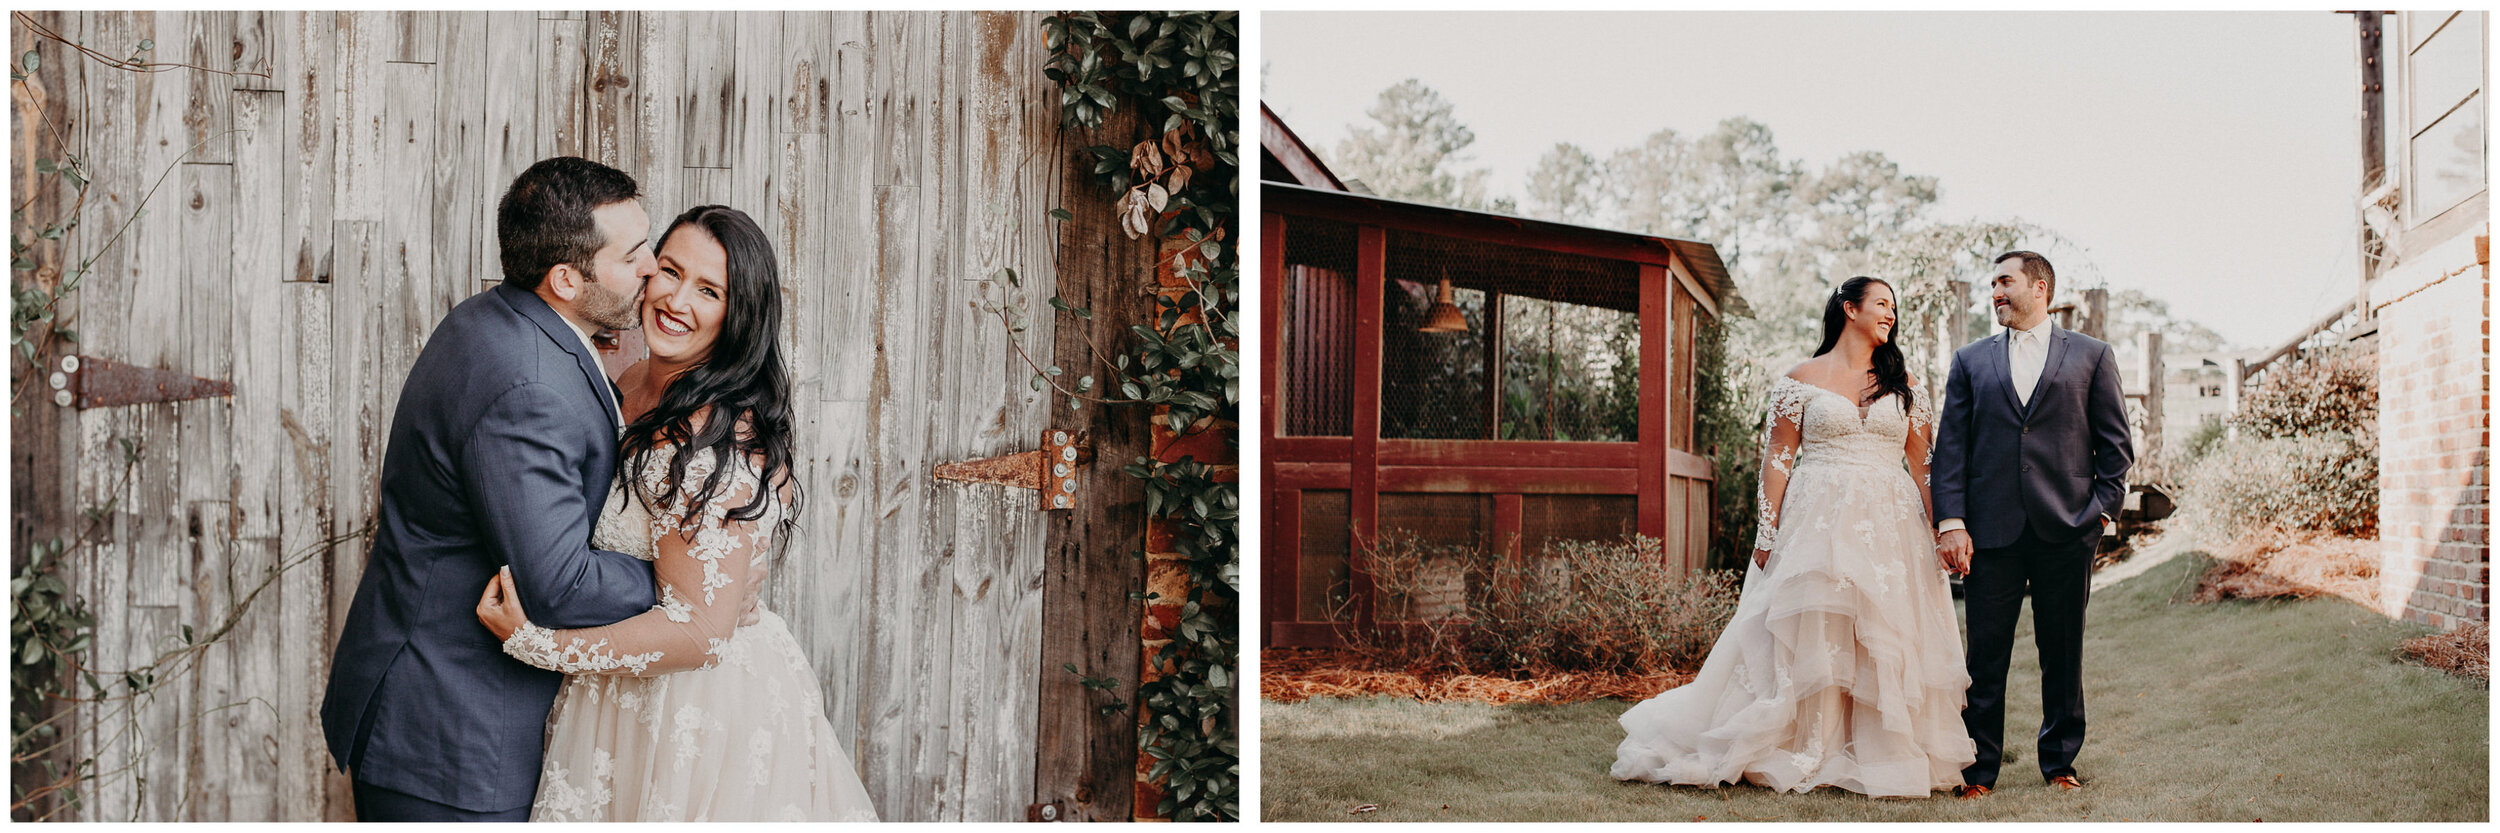 Cheery_Hollow_Farm_Atlanta_Wedding_Photography_Aline_Marin78.jpg